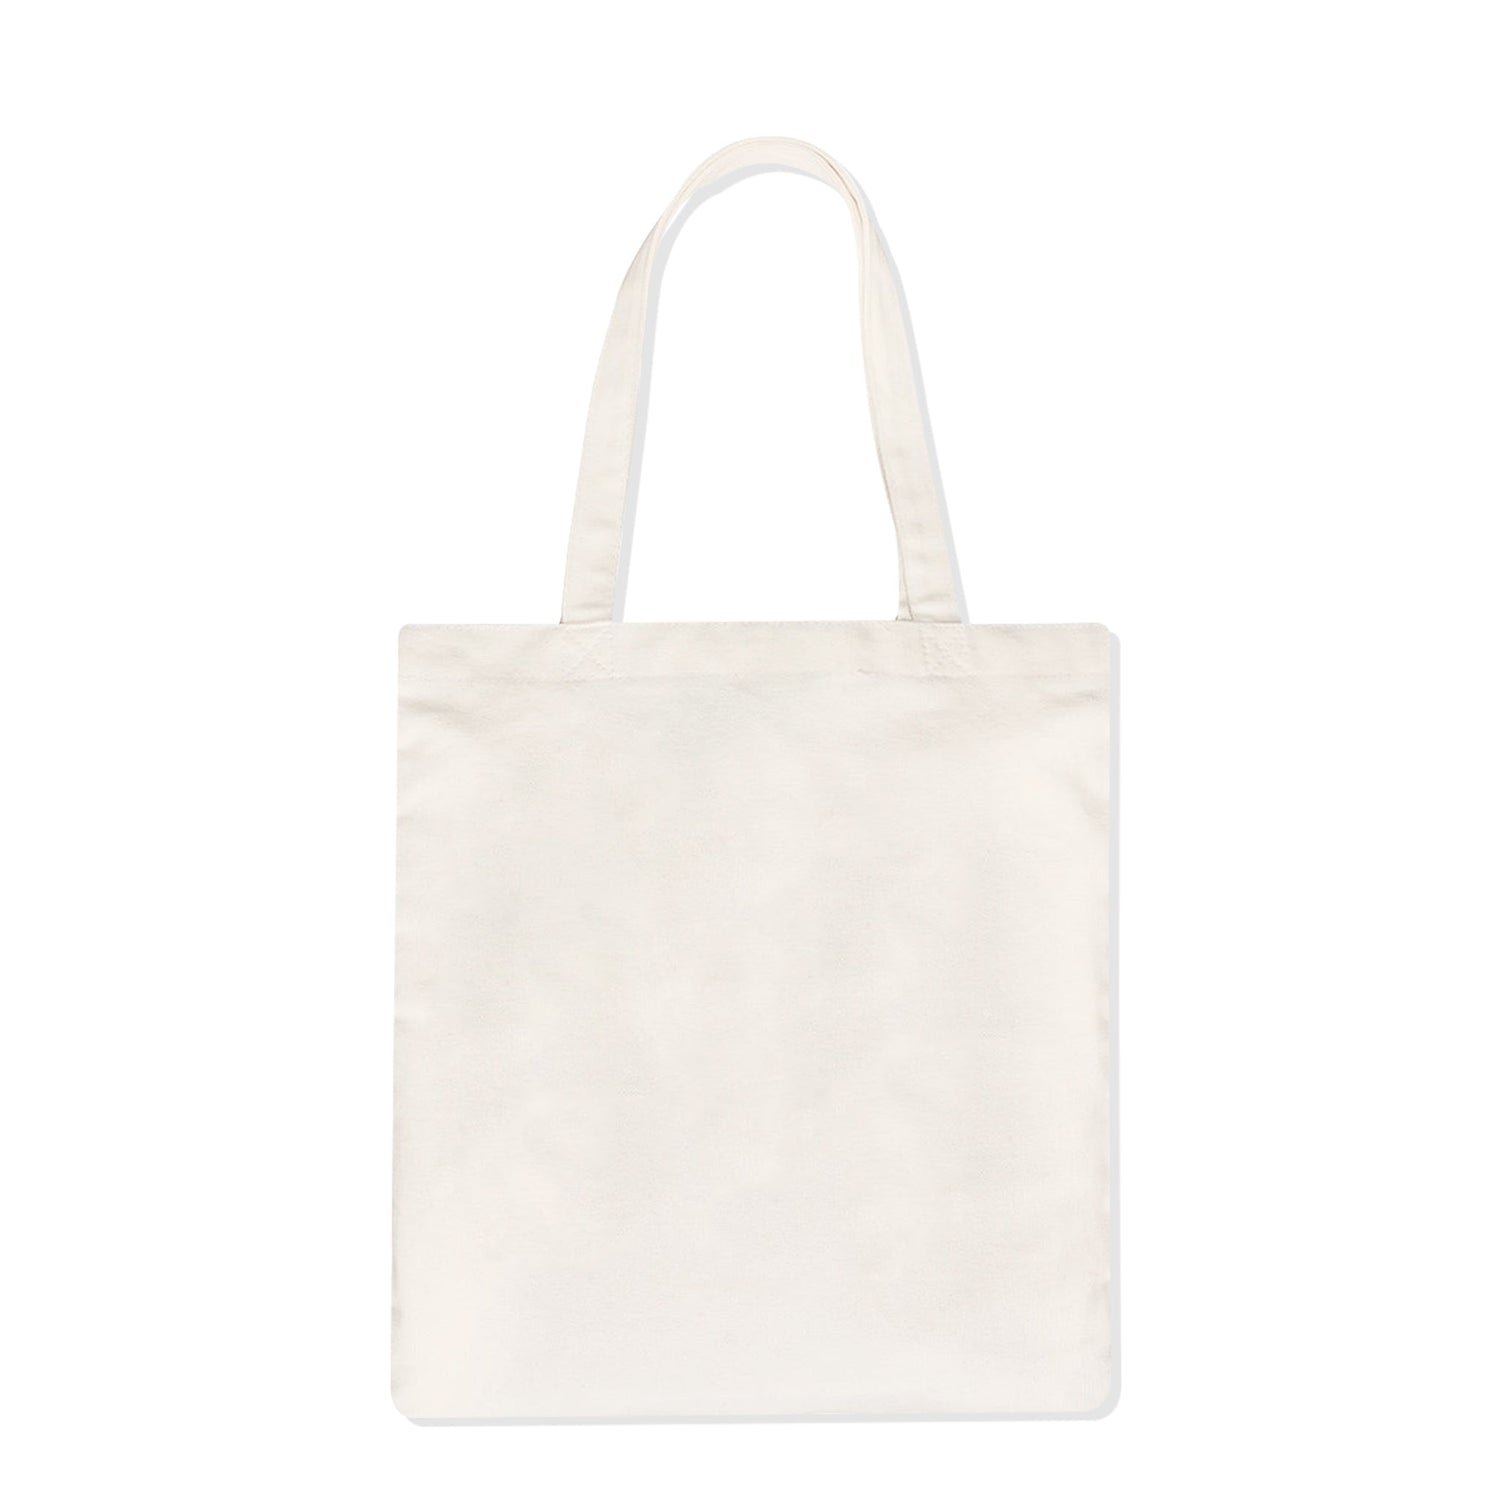 One Choice Natural Tote Bag - Organic Cotton - One Choice Apparel